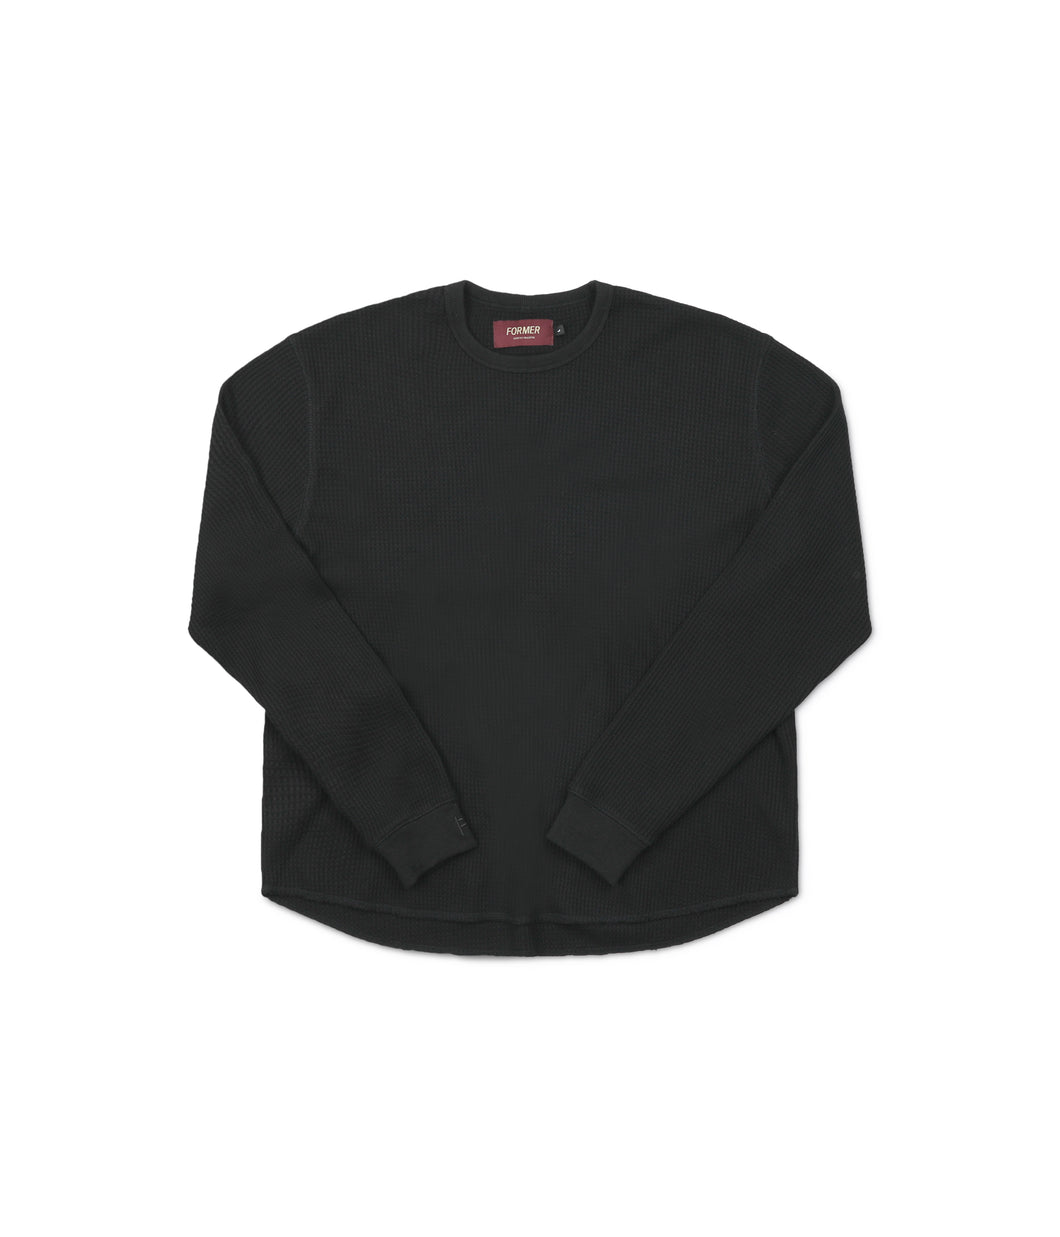 Former - AG Waffle Long Sleeve Shirt in Black